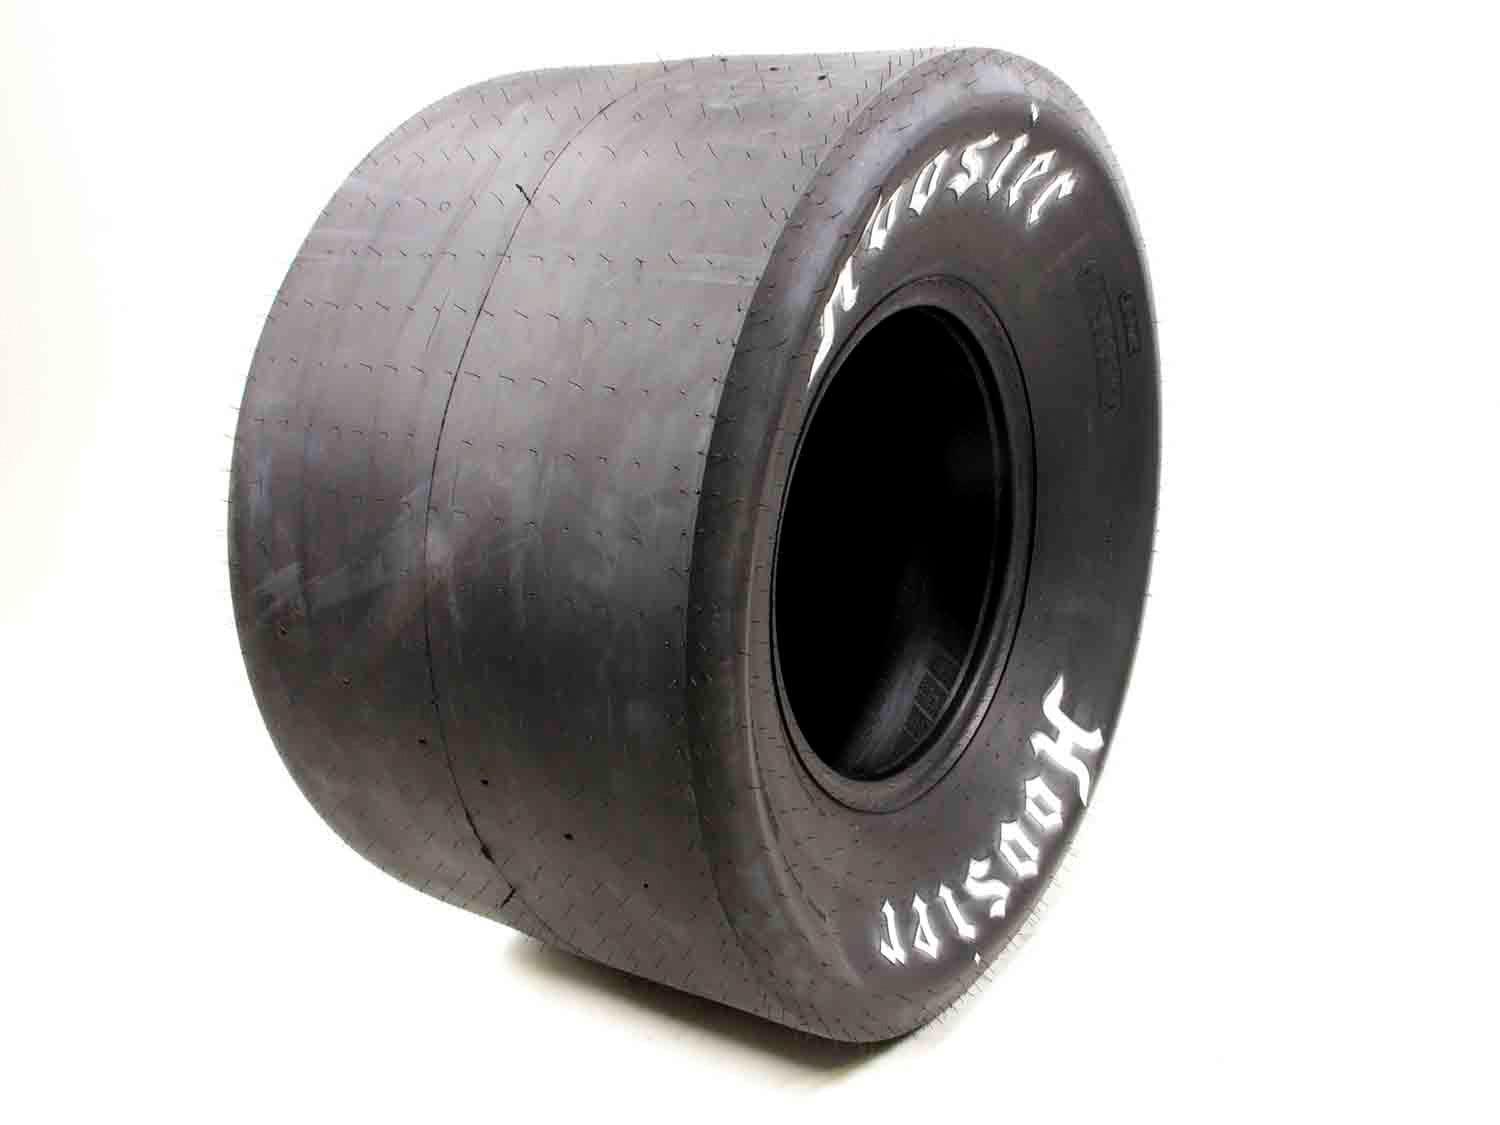 33.5/17-16 Drag Tire - Burlile Performance Products